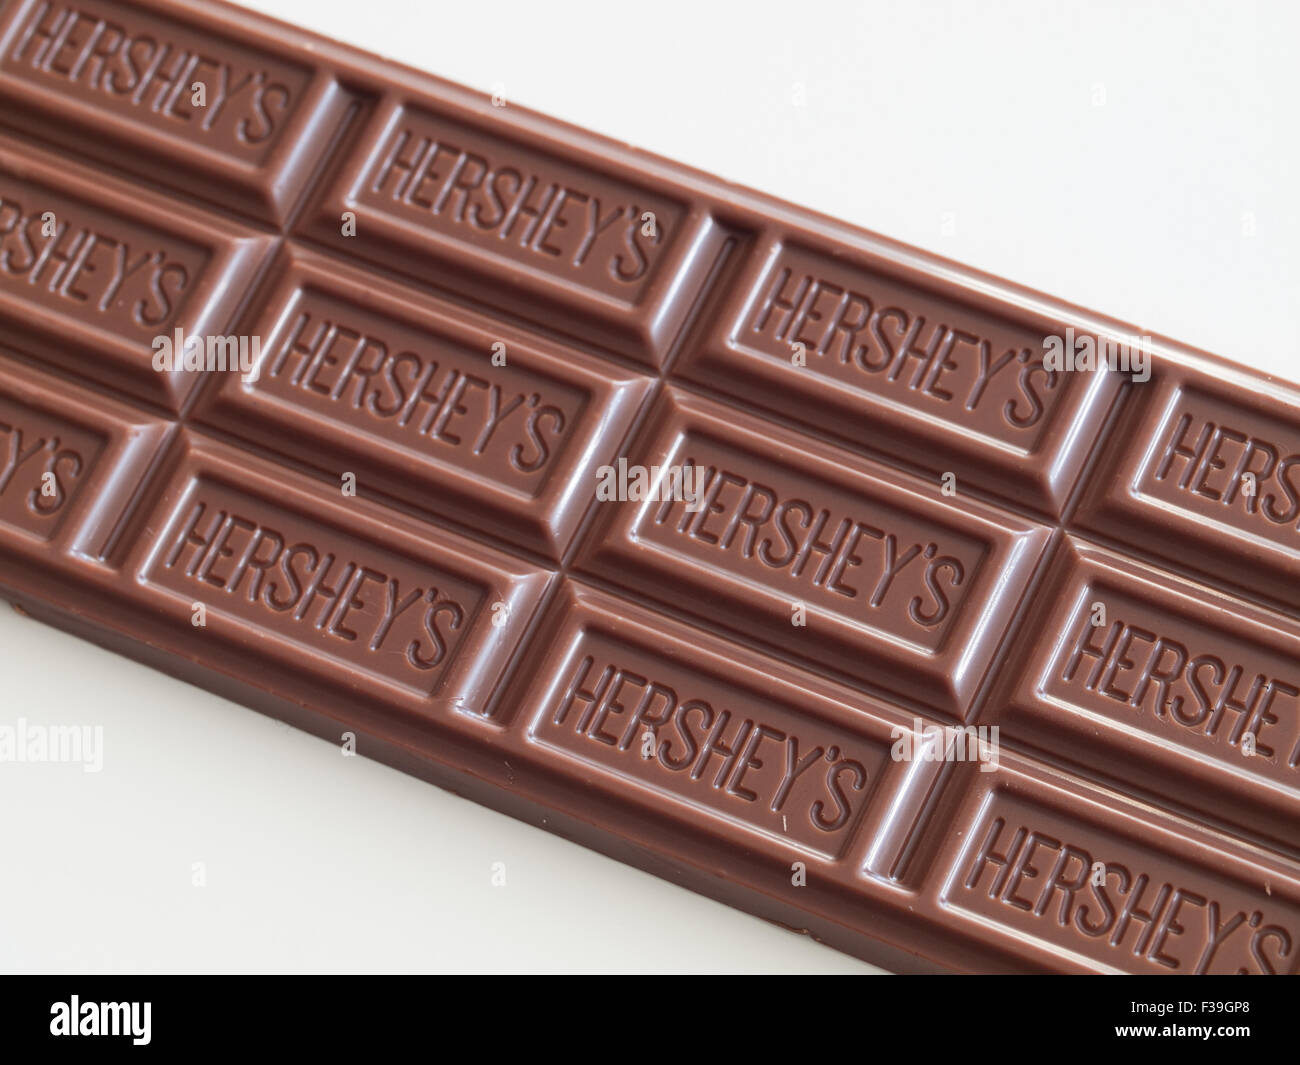 A Hershey's milk chocolate bar. Stock Photo